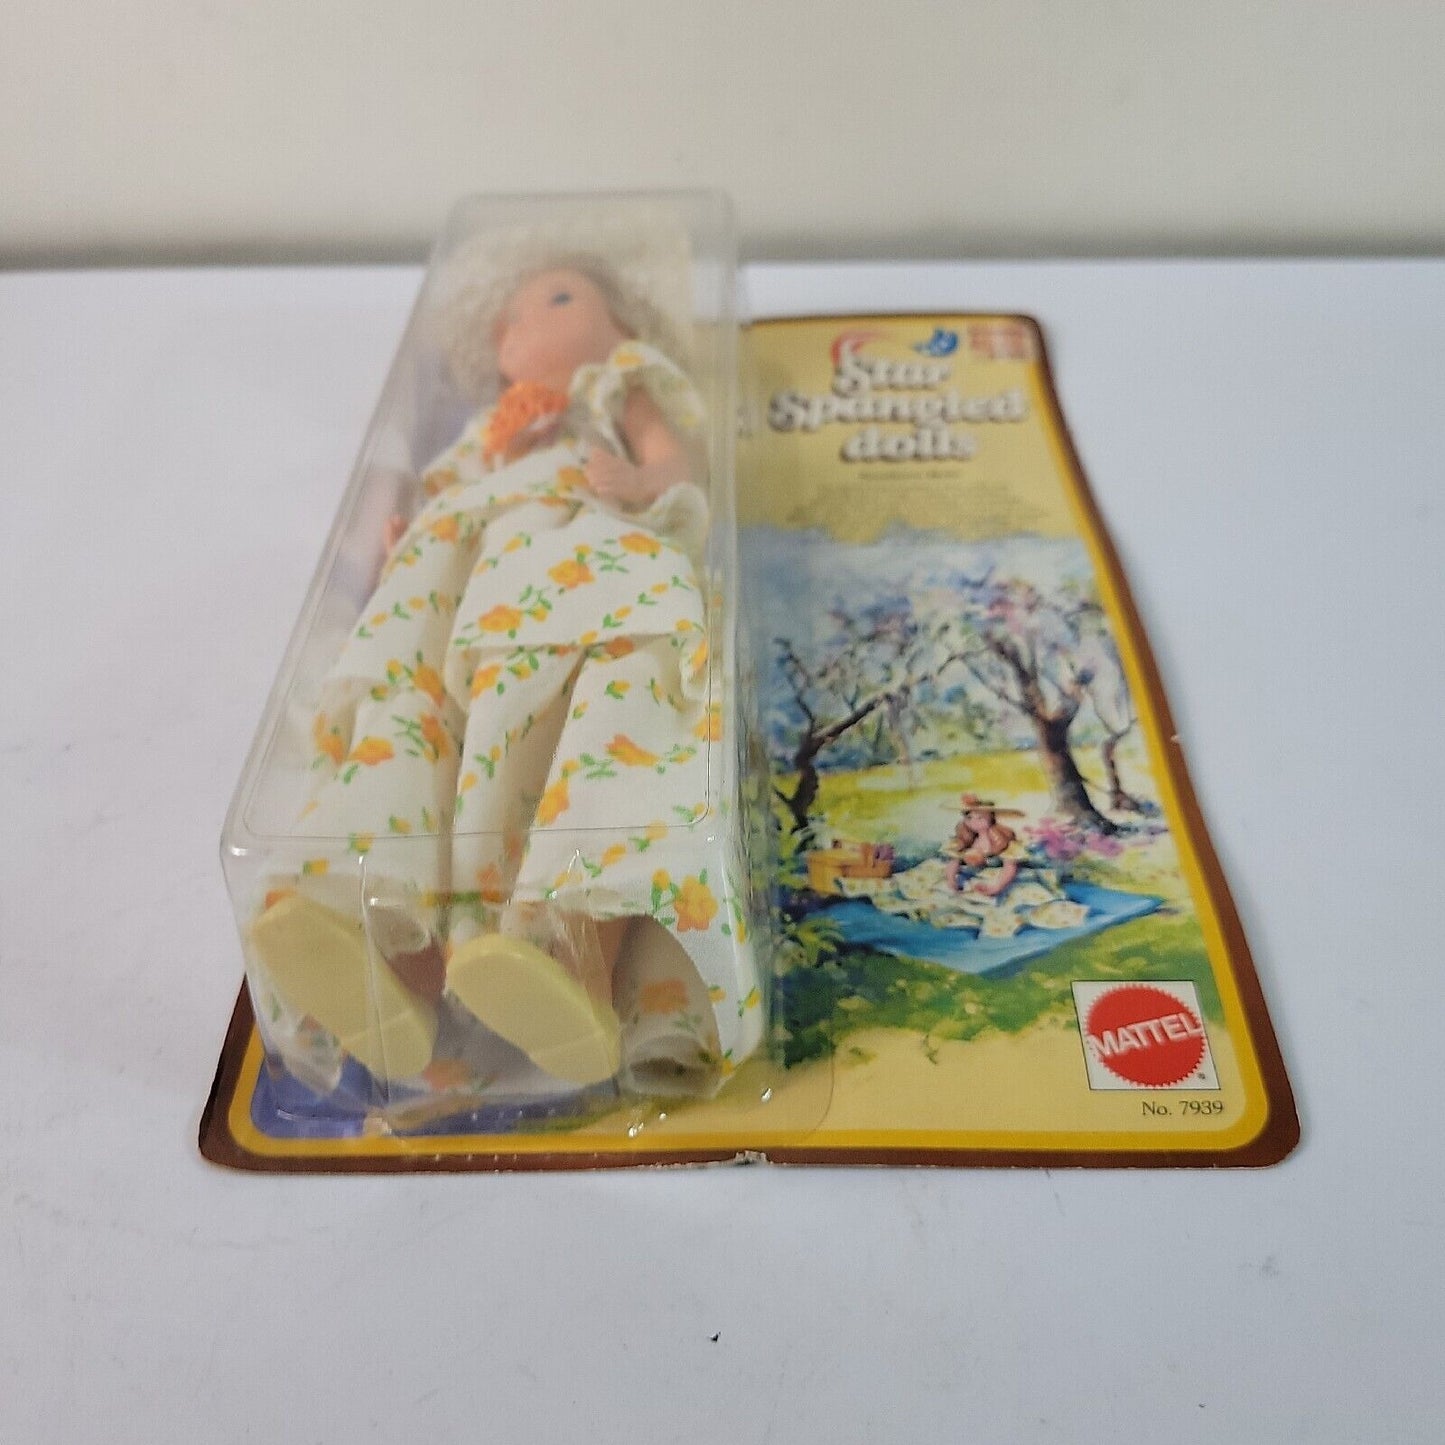 Star Spangled Dolls Southern Belle 1976 Vintage in Original Packaging